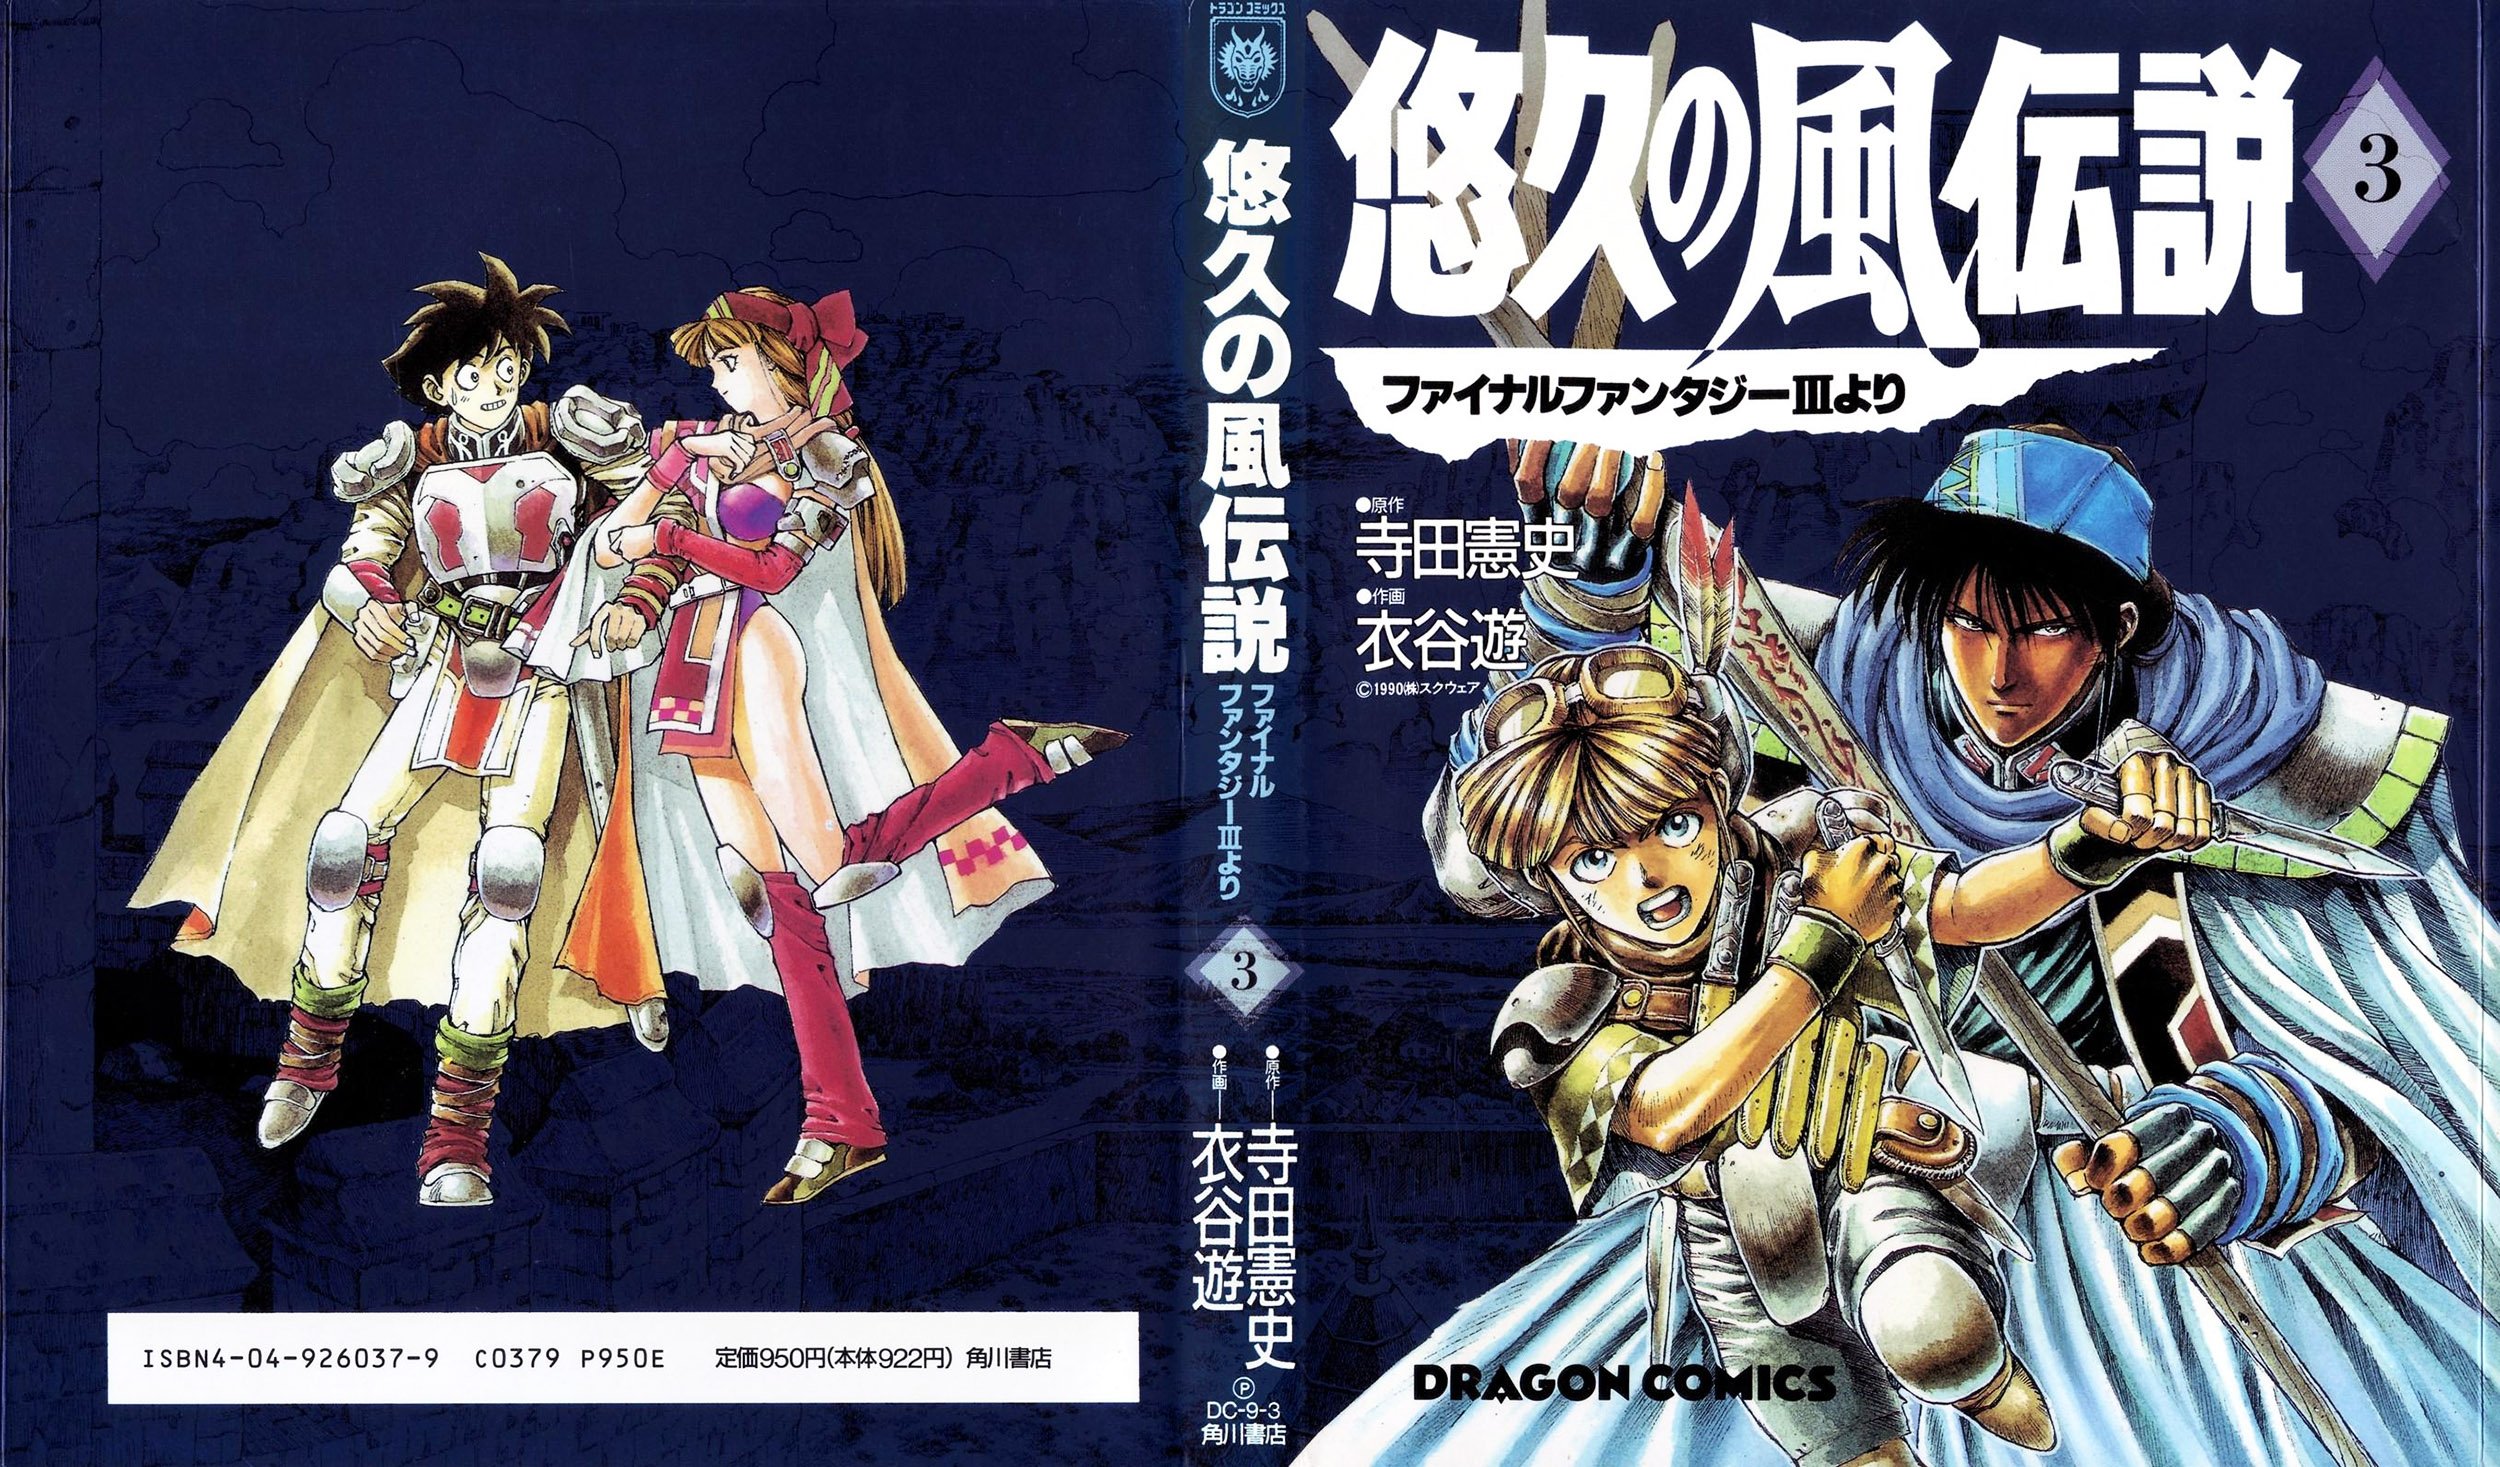 Yūkyū no Kaze Densetsu - Final Fantasy III Yori vol.3 (September 1992)